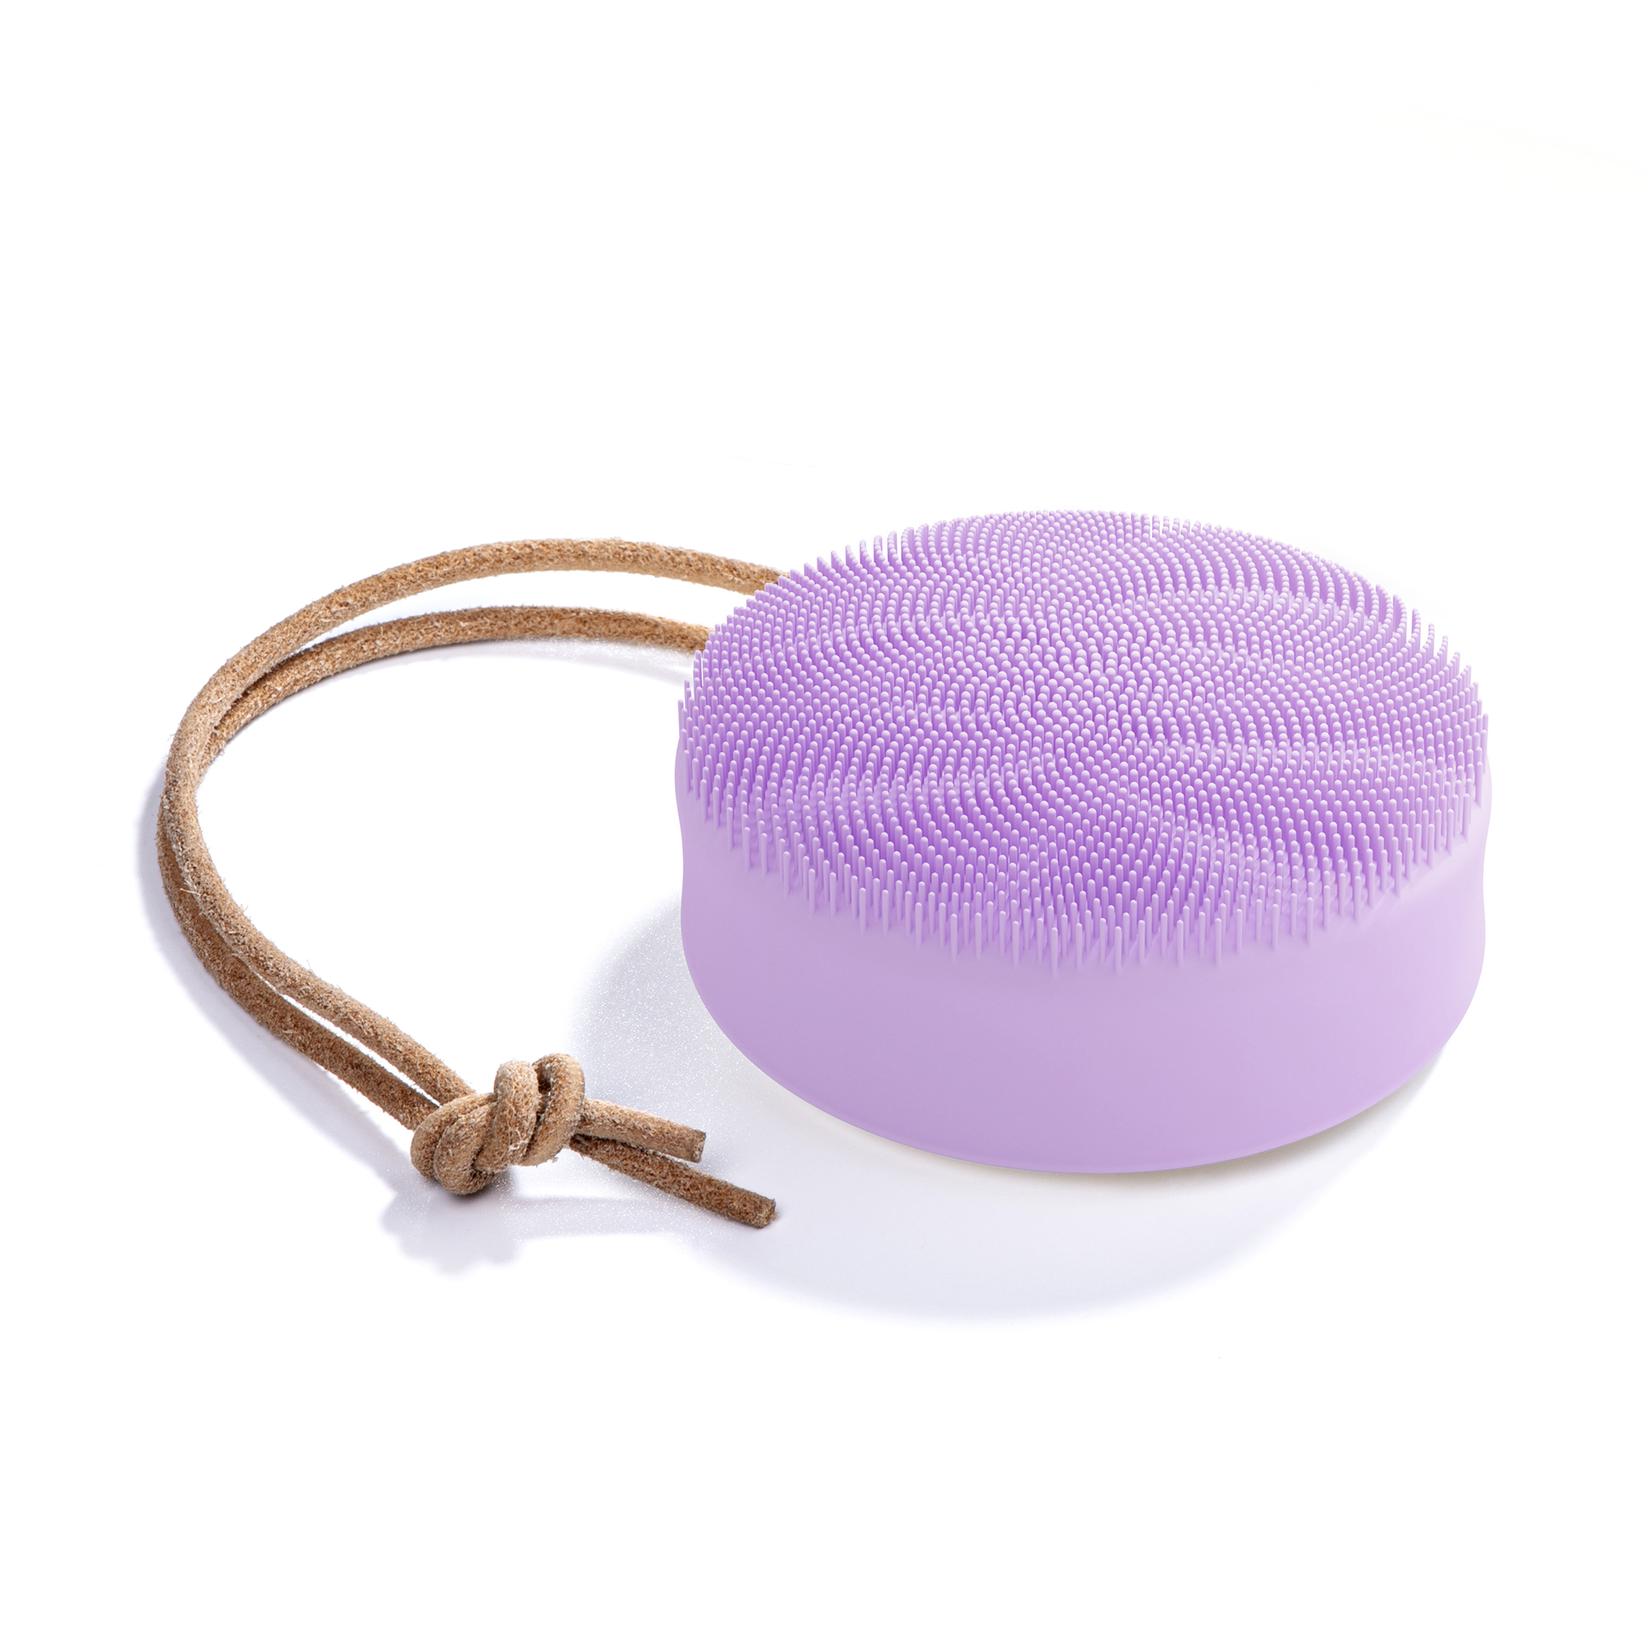 FOREO LUNA 4 Body Lavender Pametni sonični uređaj i masažer za čišćenje tela